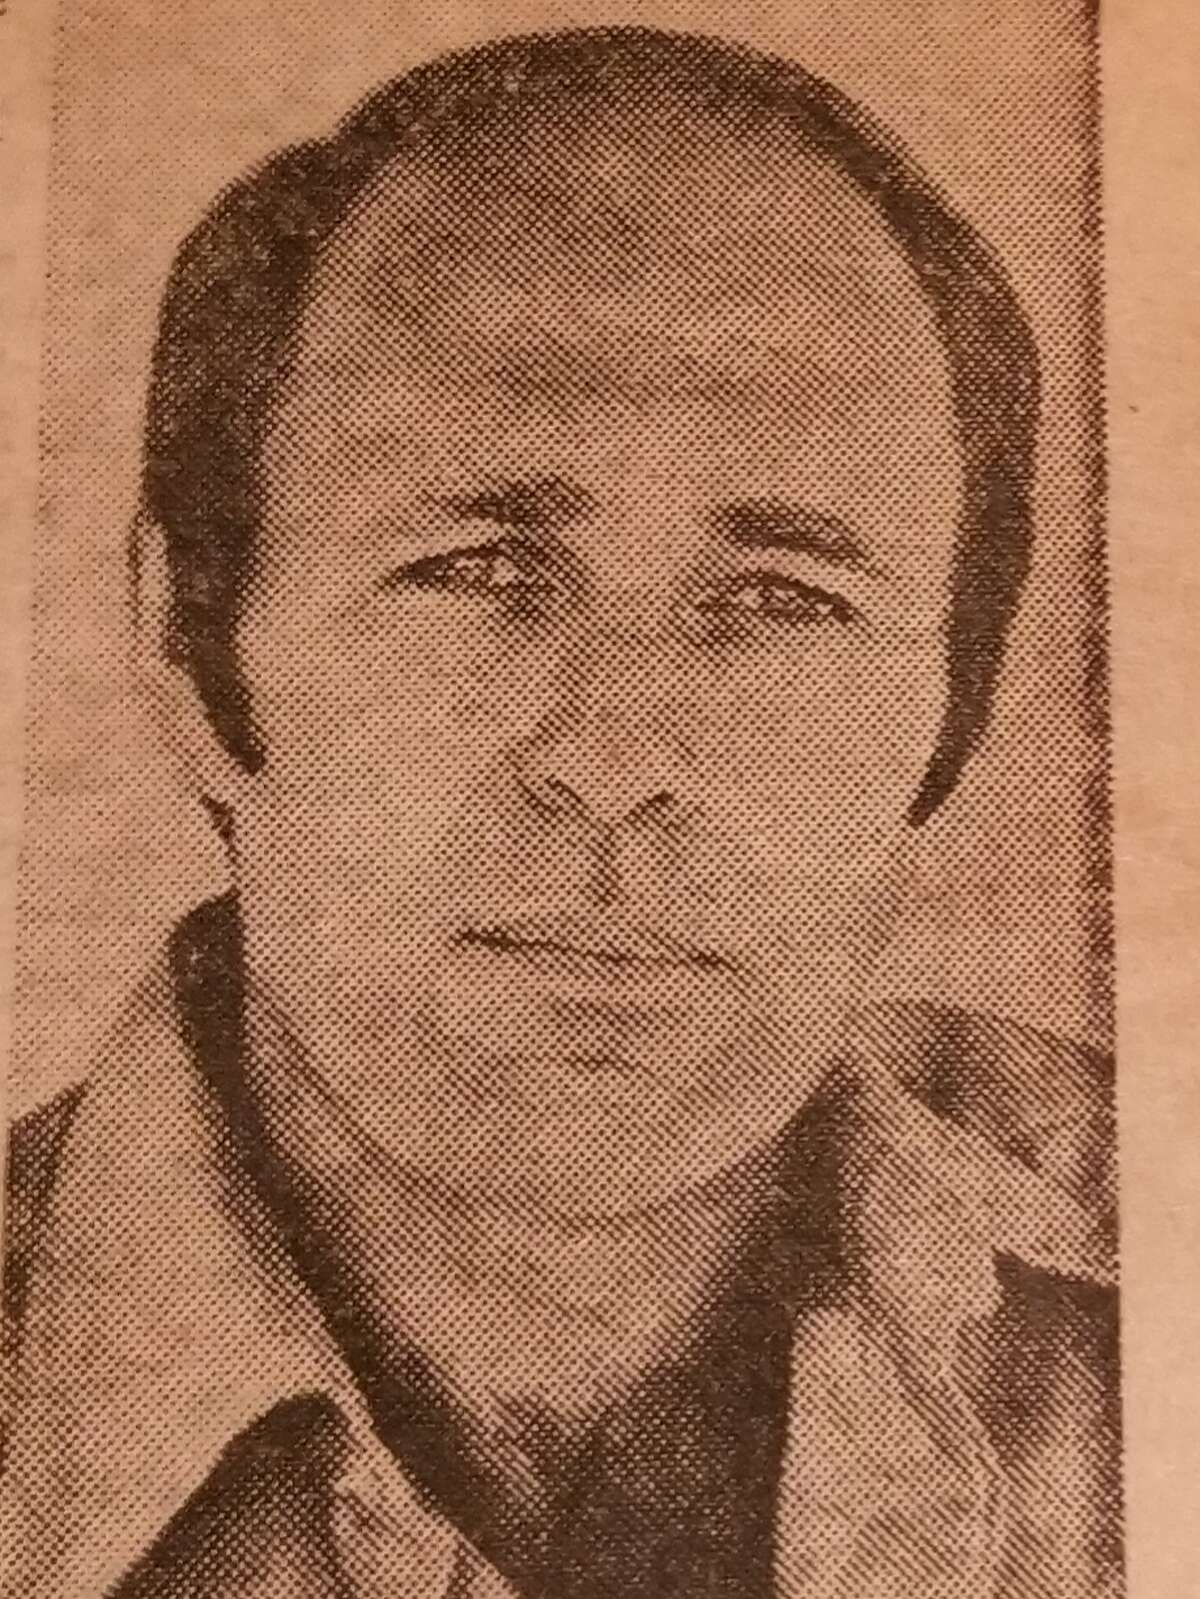 Actor-director Peter Masterson, circa 1988